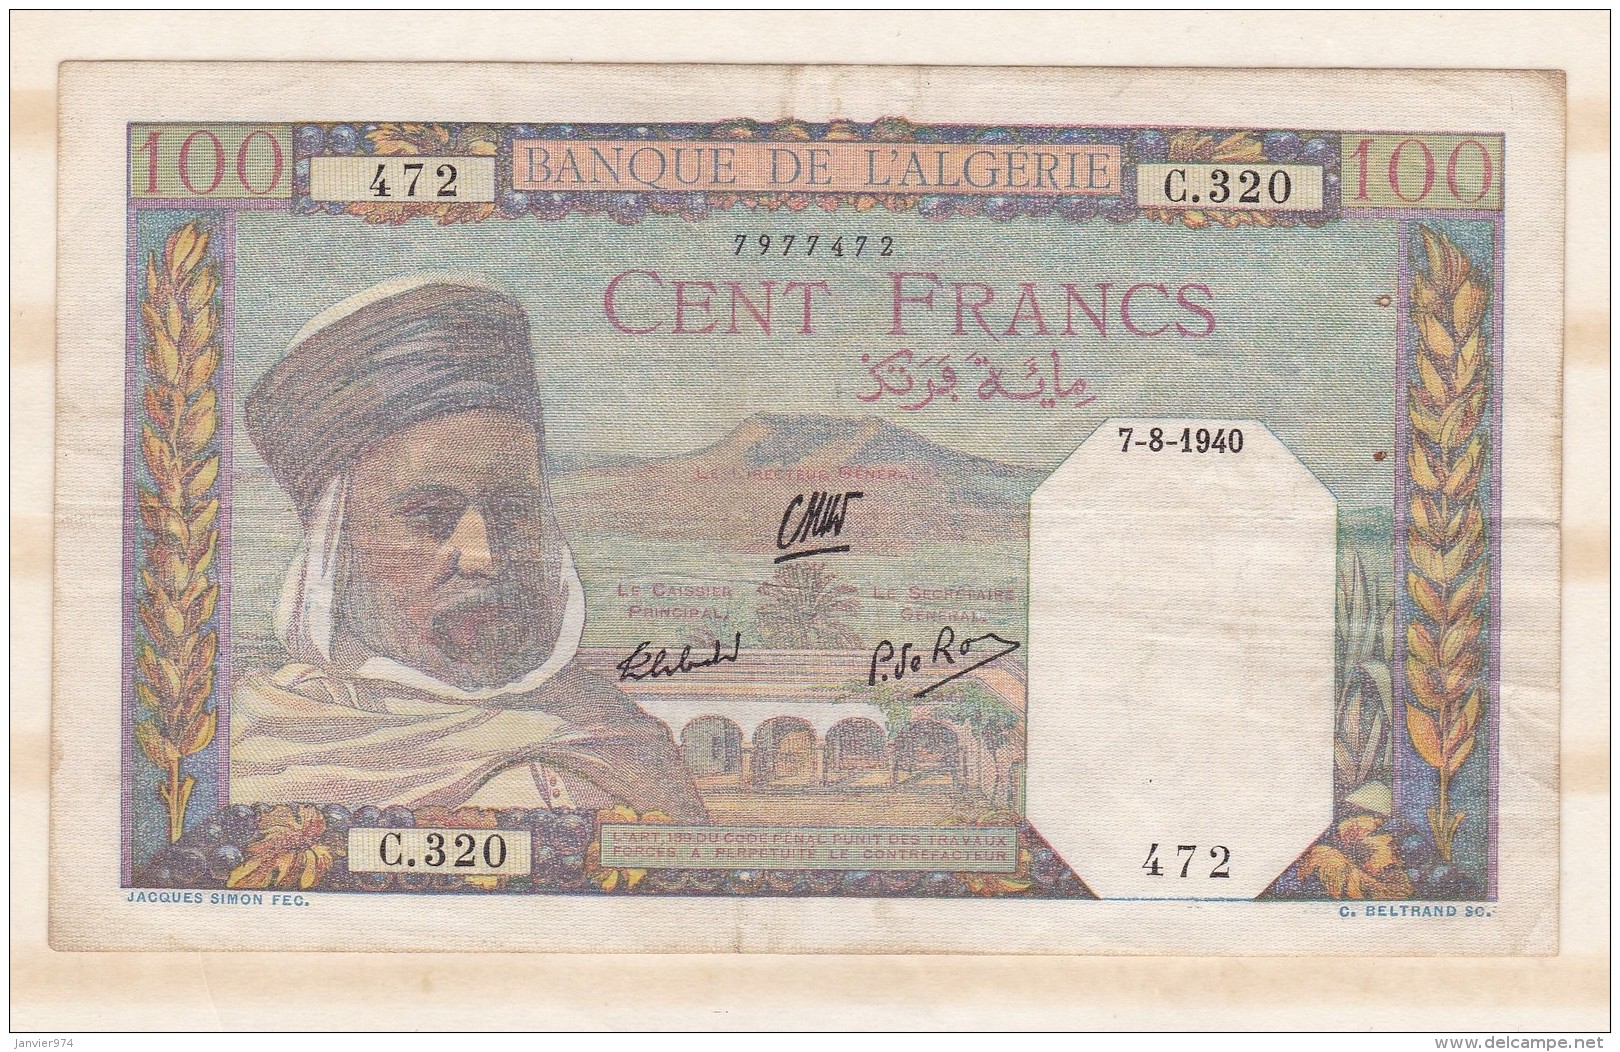 Billet . 100 FRANCS 27 - 8  - 1940, Alphabet C.320  N° 472 - Argelia